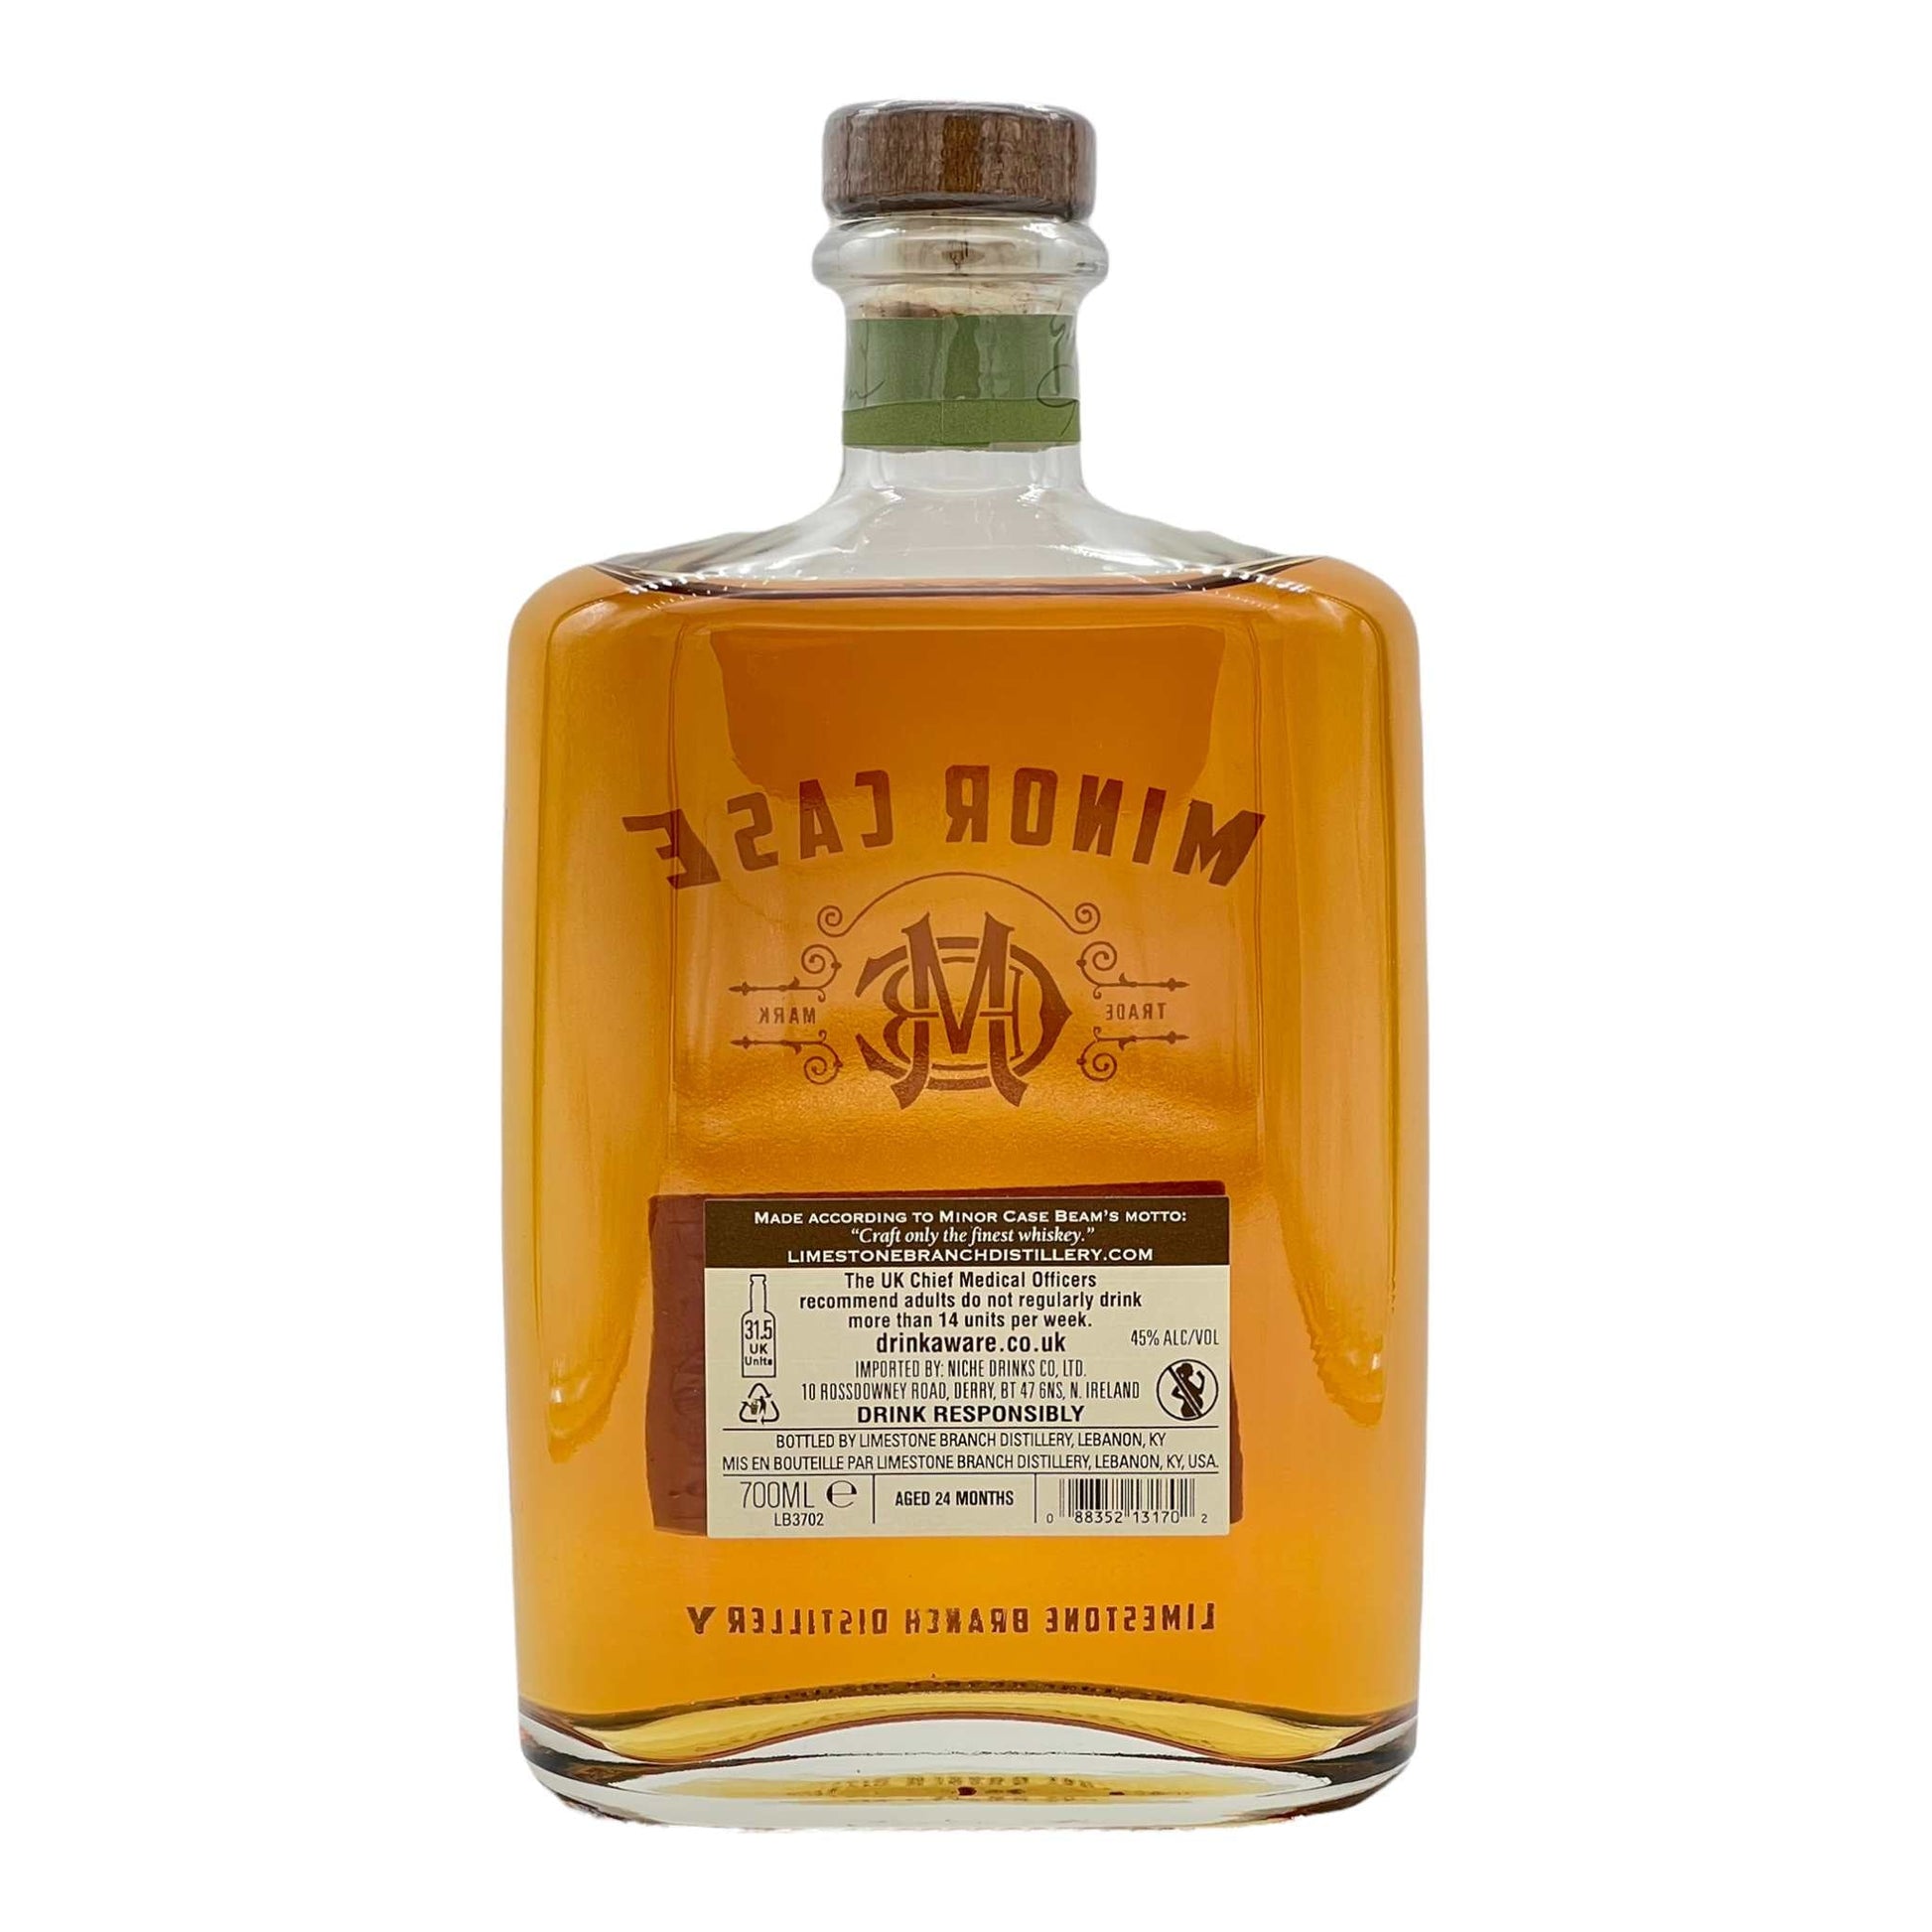 Minor Case | Kentucky Straight Rye Whiskey | 0,7l | 45%GET A BOTTLE